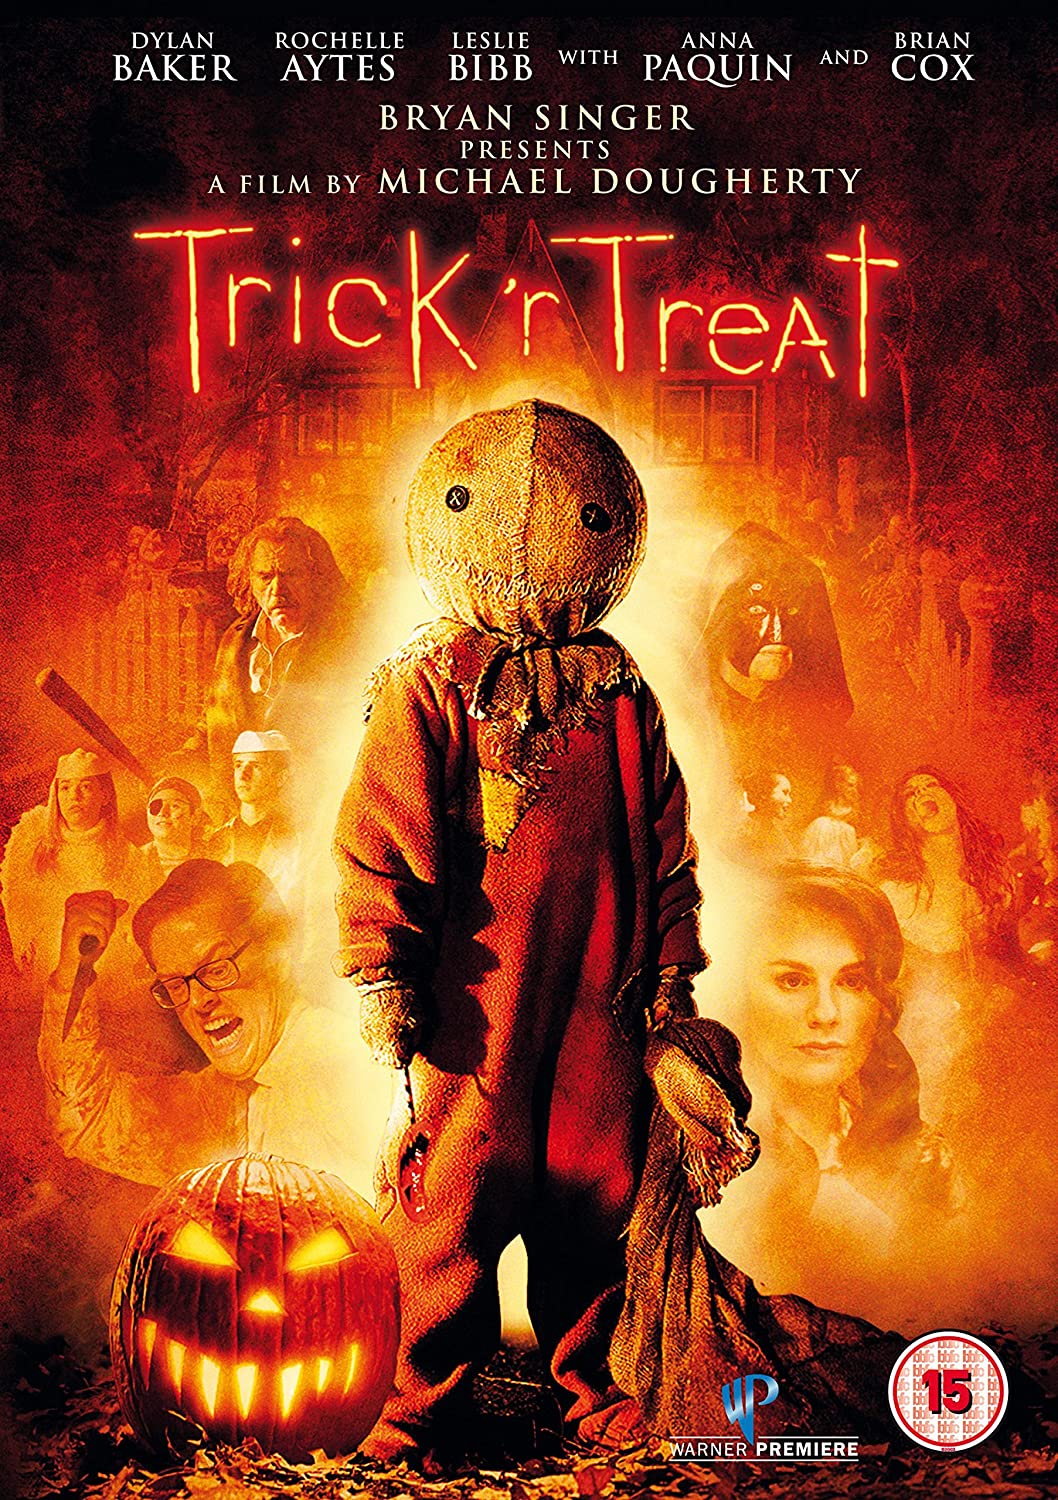 Trick 'r Treat [2007] – Horror/Thriller [DVD]